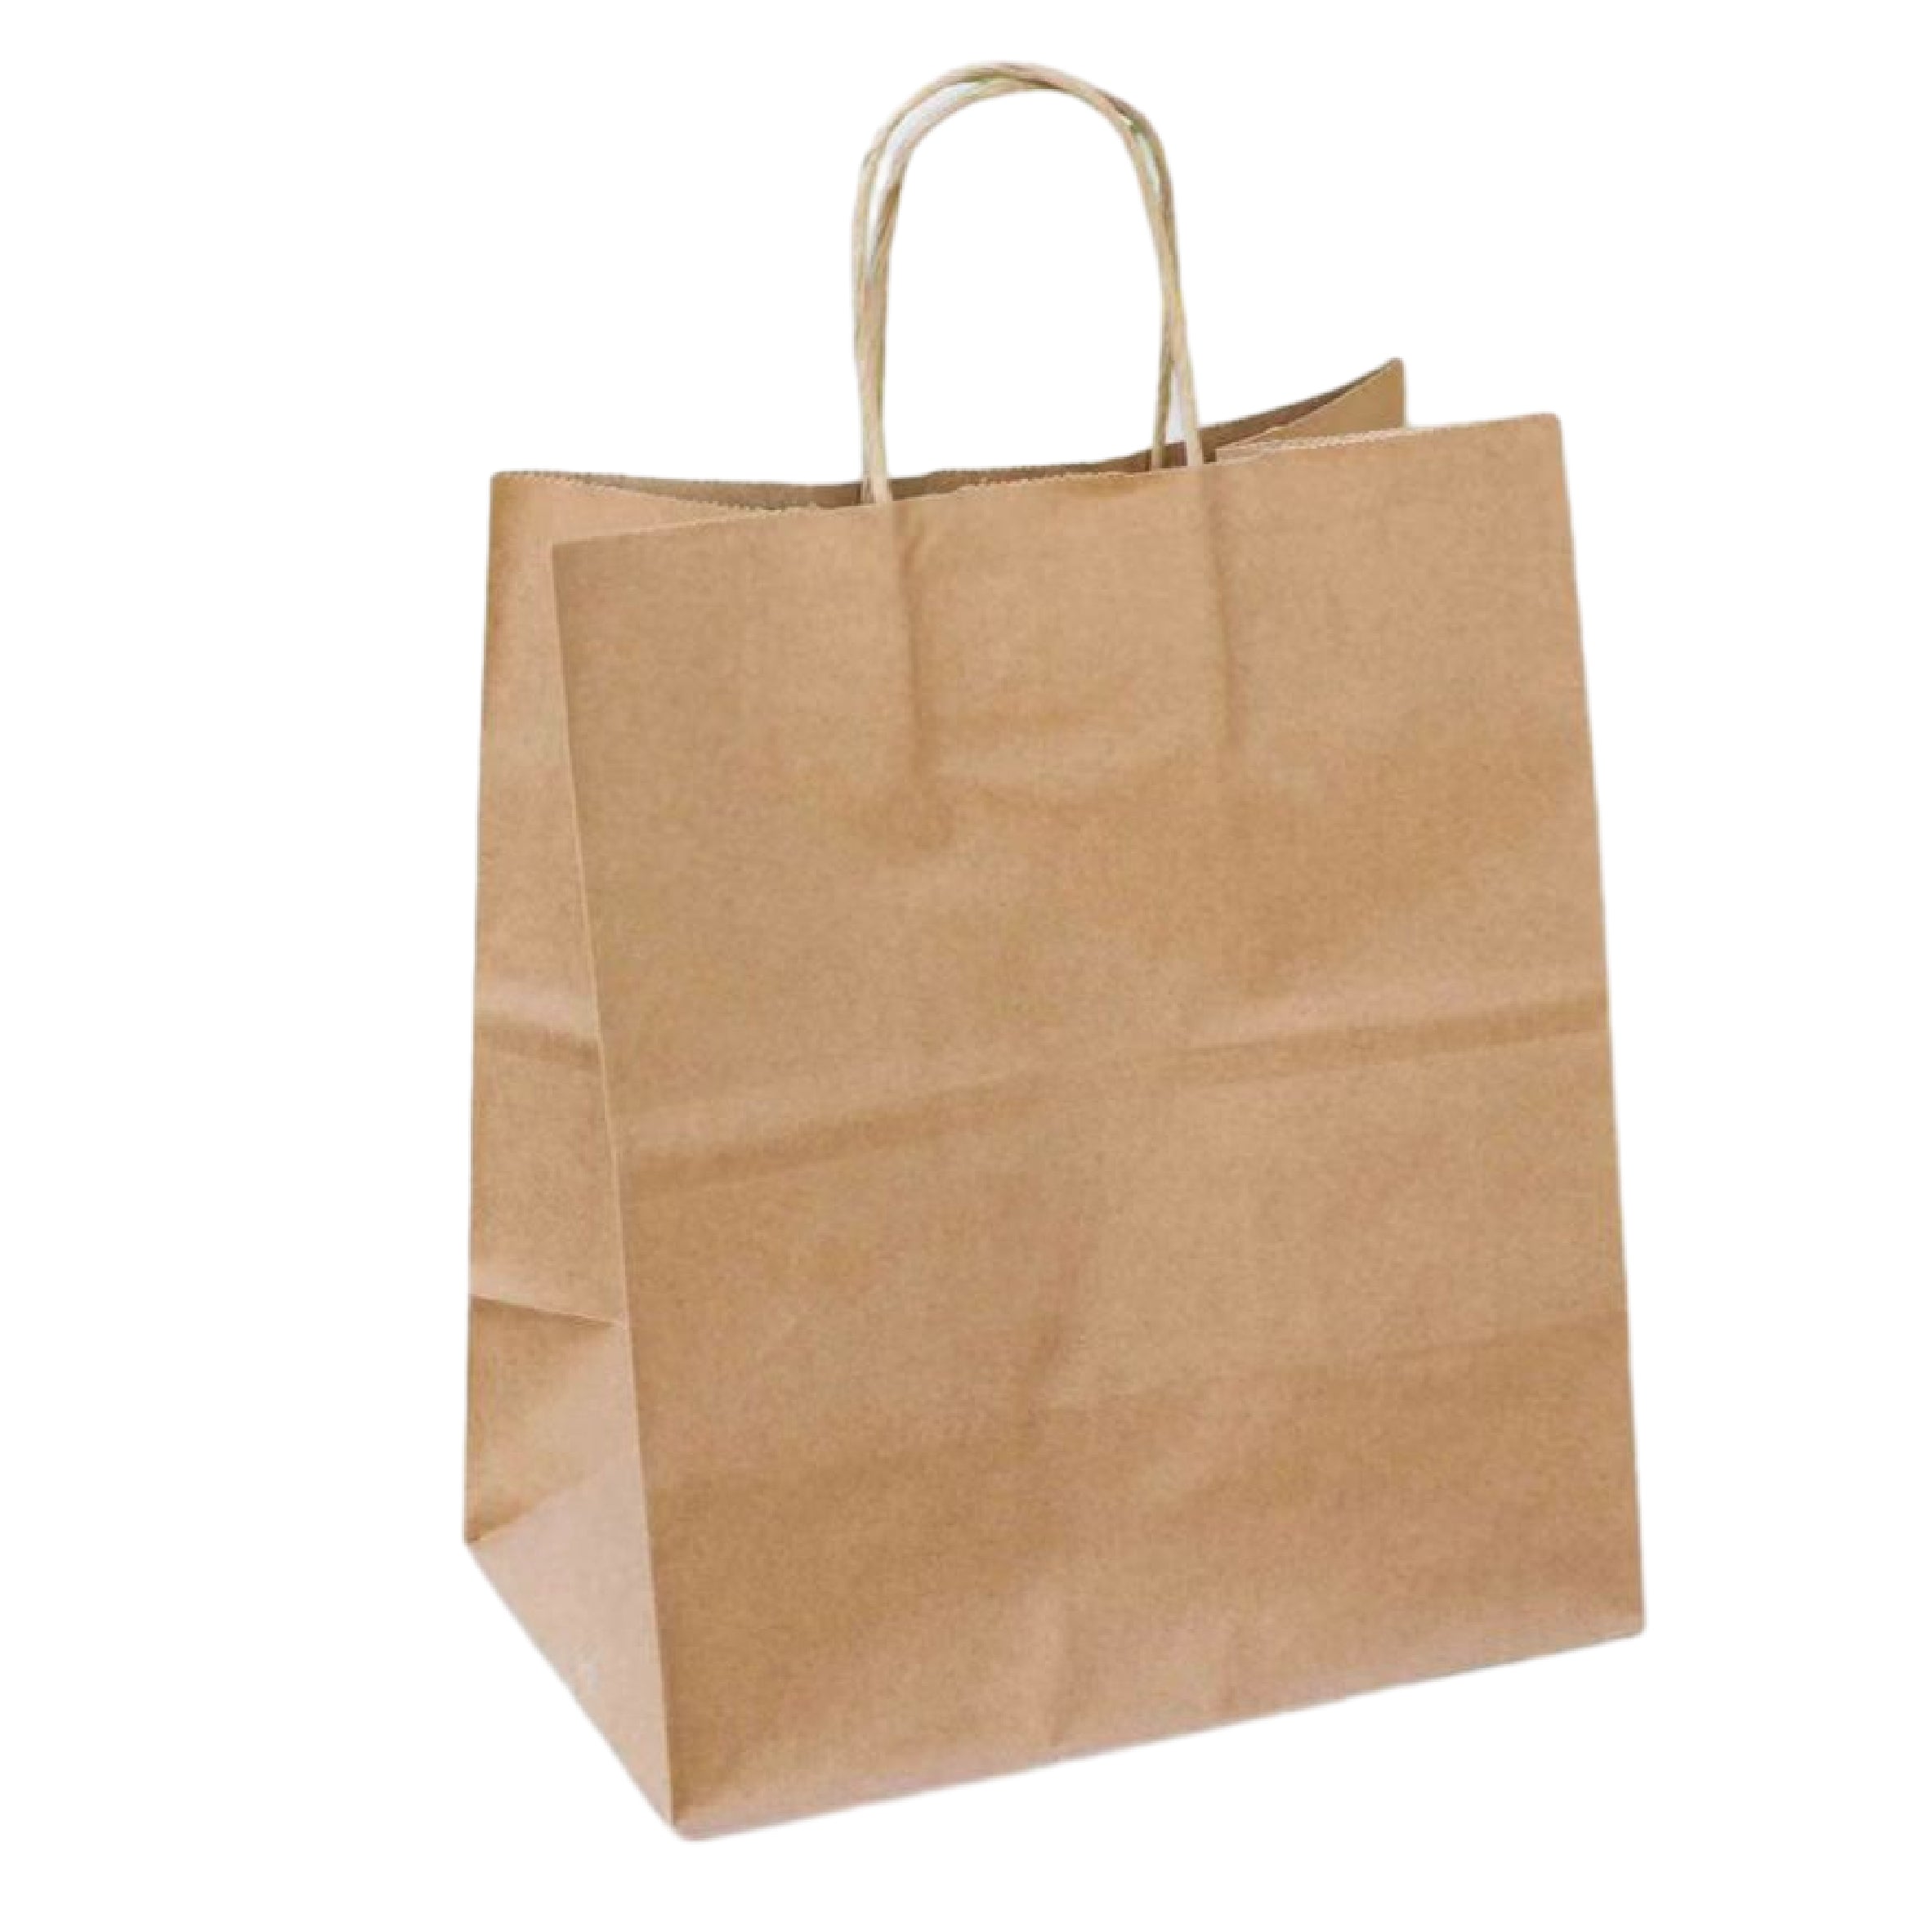 10.2 x 12 x 6.5 inch Paper Handle Shopping Bag